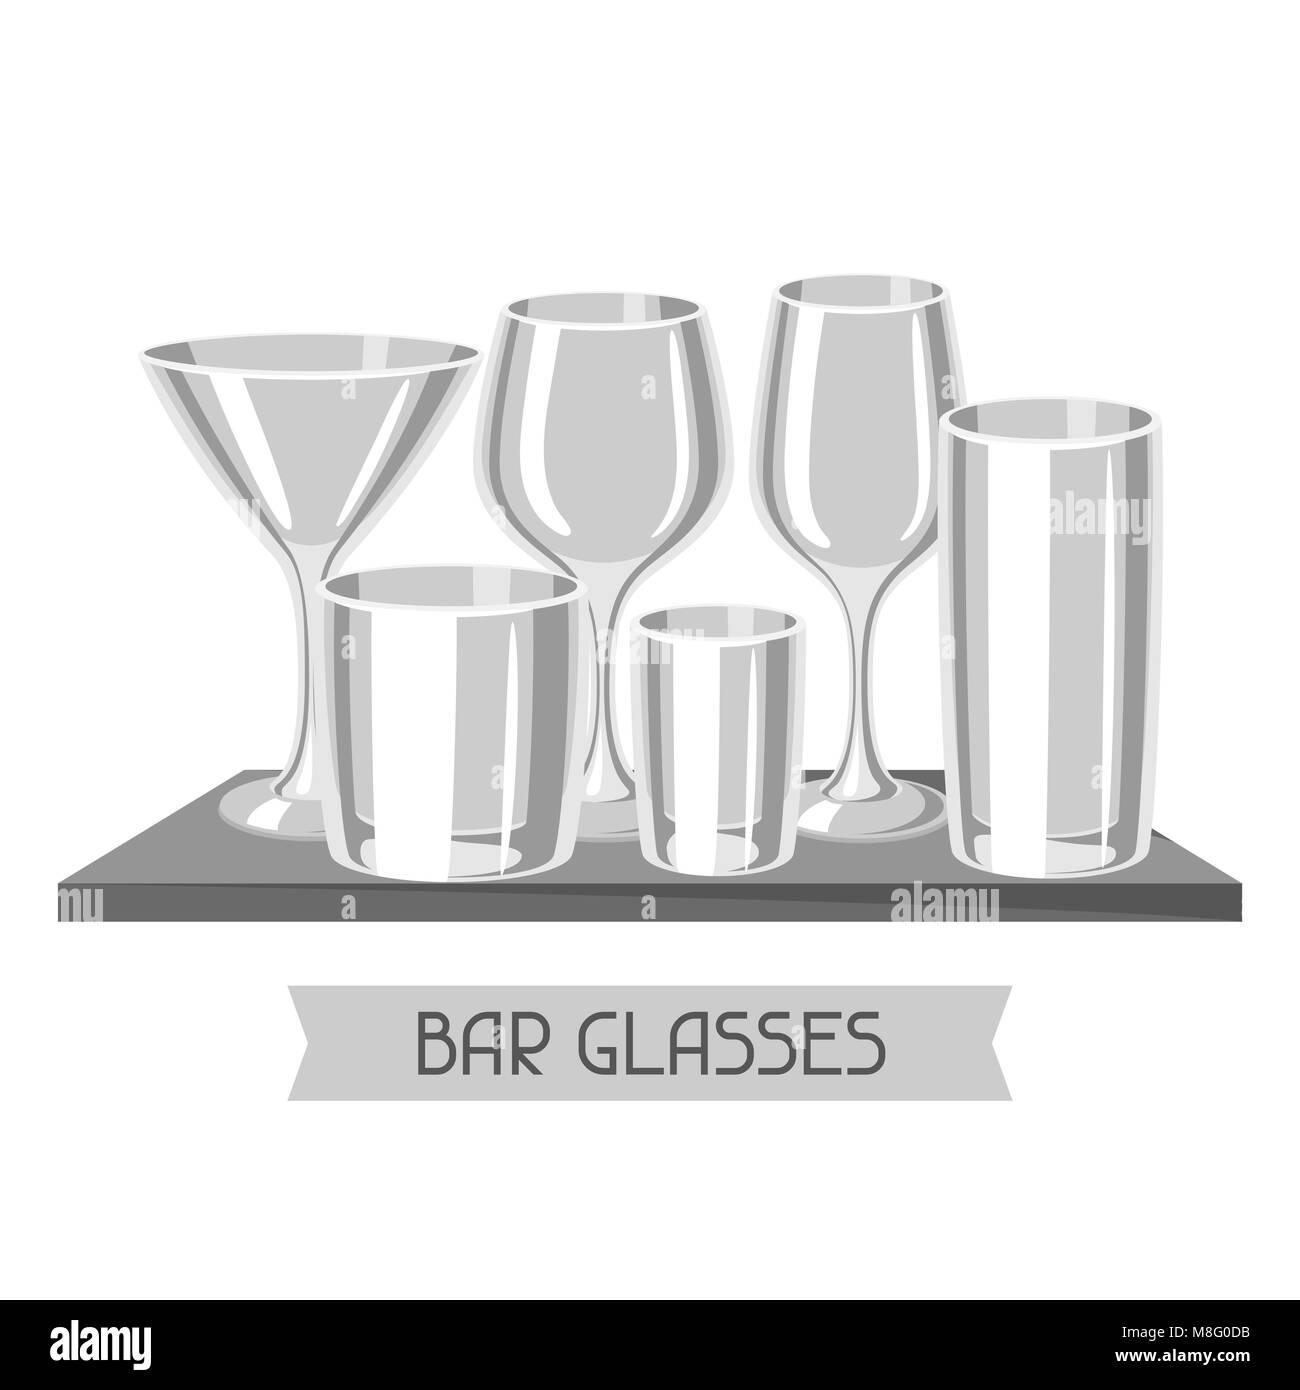 https://c8.alamy.com/comp/M8G0DB/types-of-bar-glasses-set-of-alcohol-glassware-on-shelf-M8G0DB.jpg